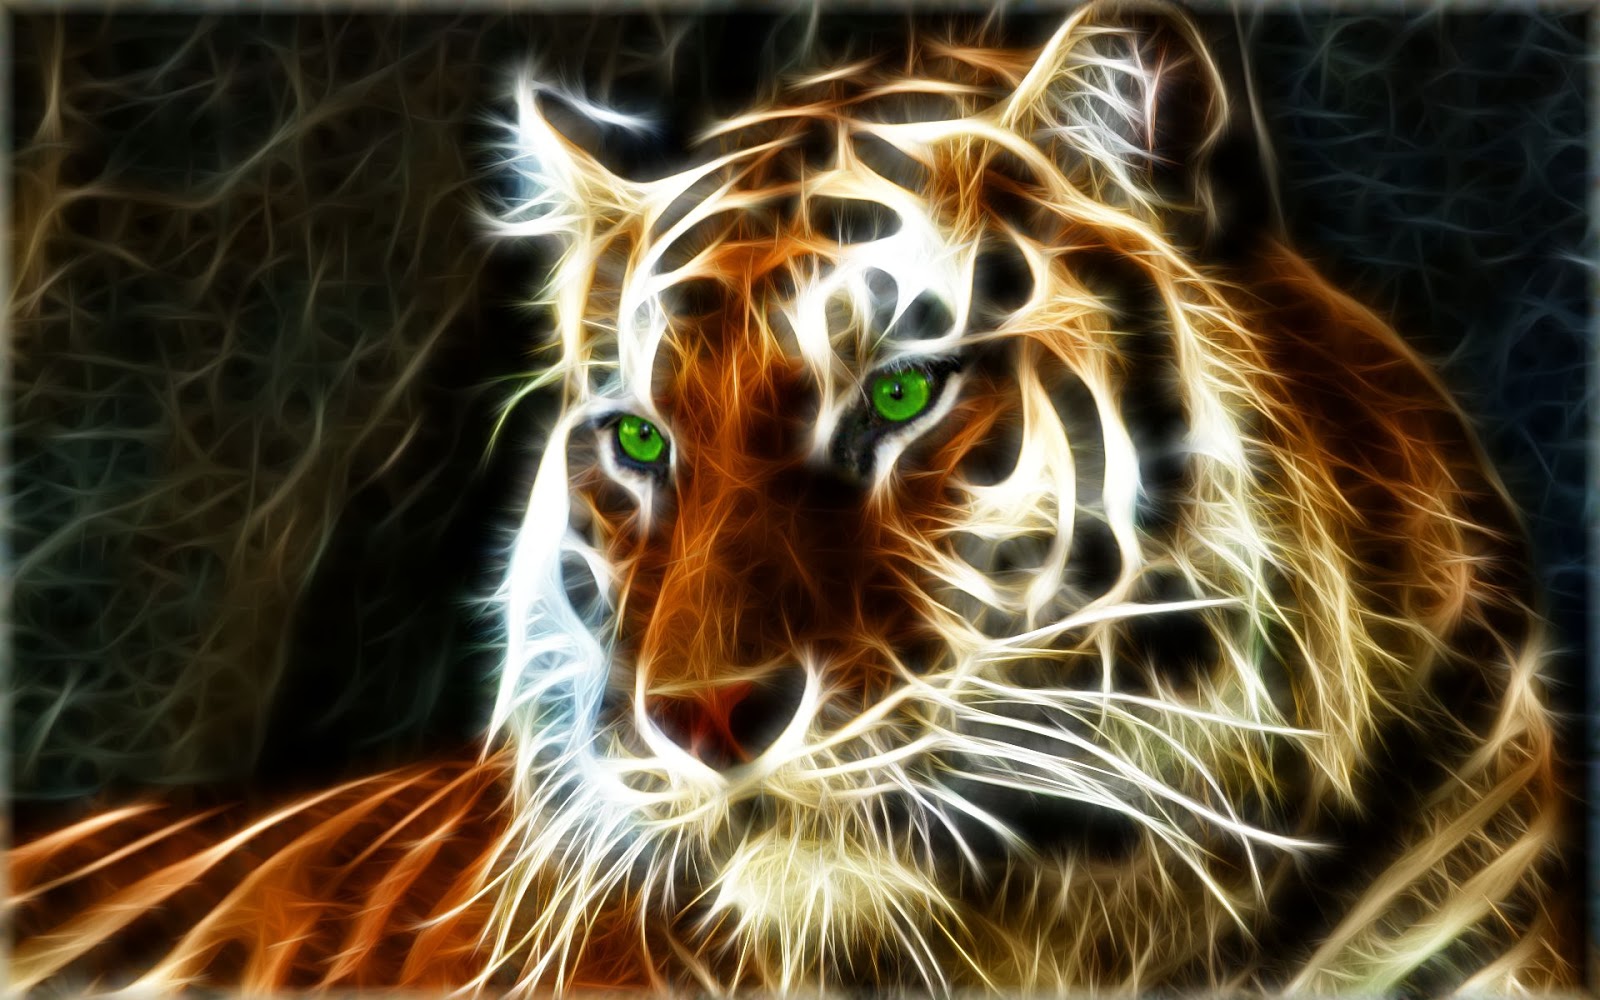 mobile desktop background face of a tiger picture download